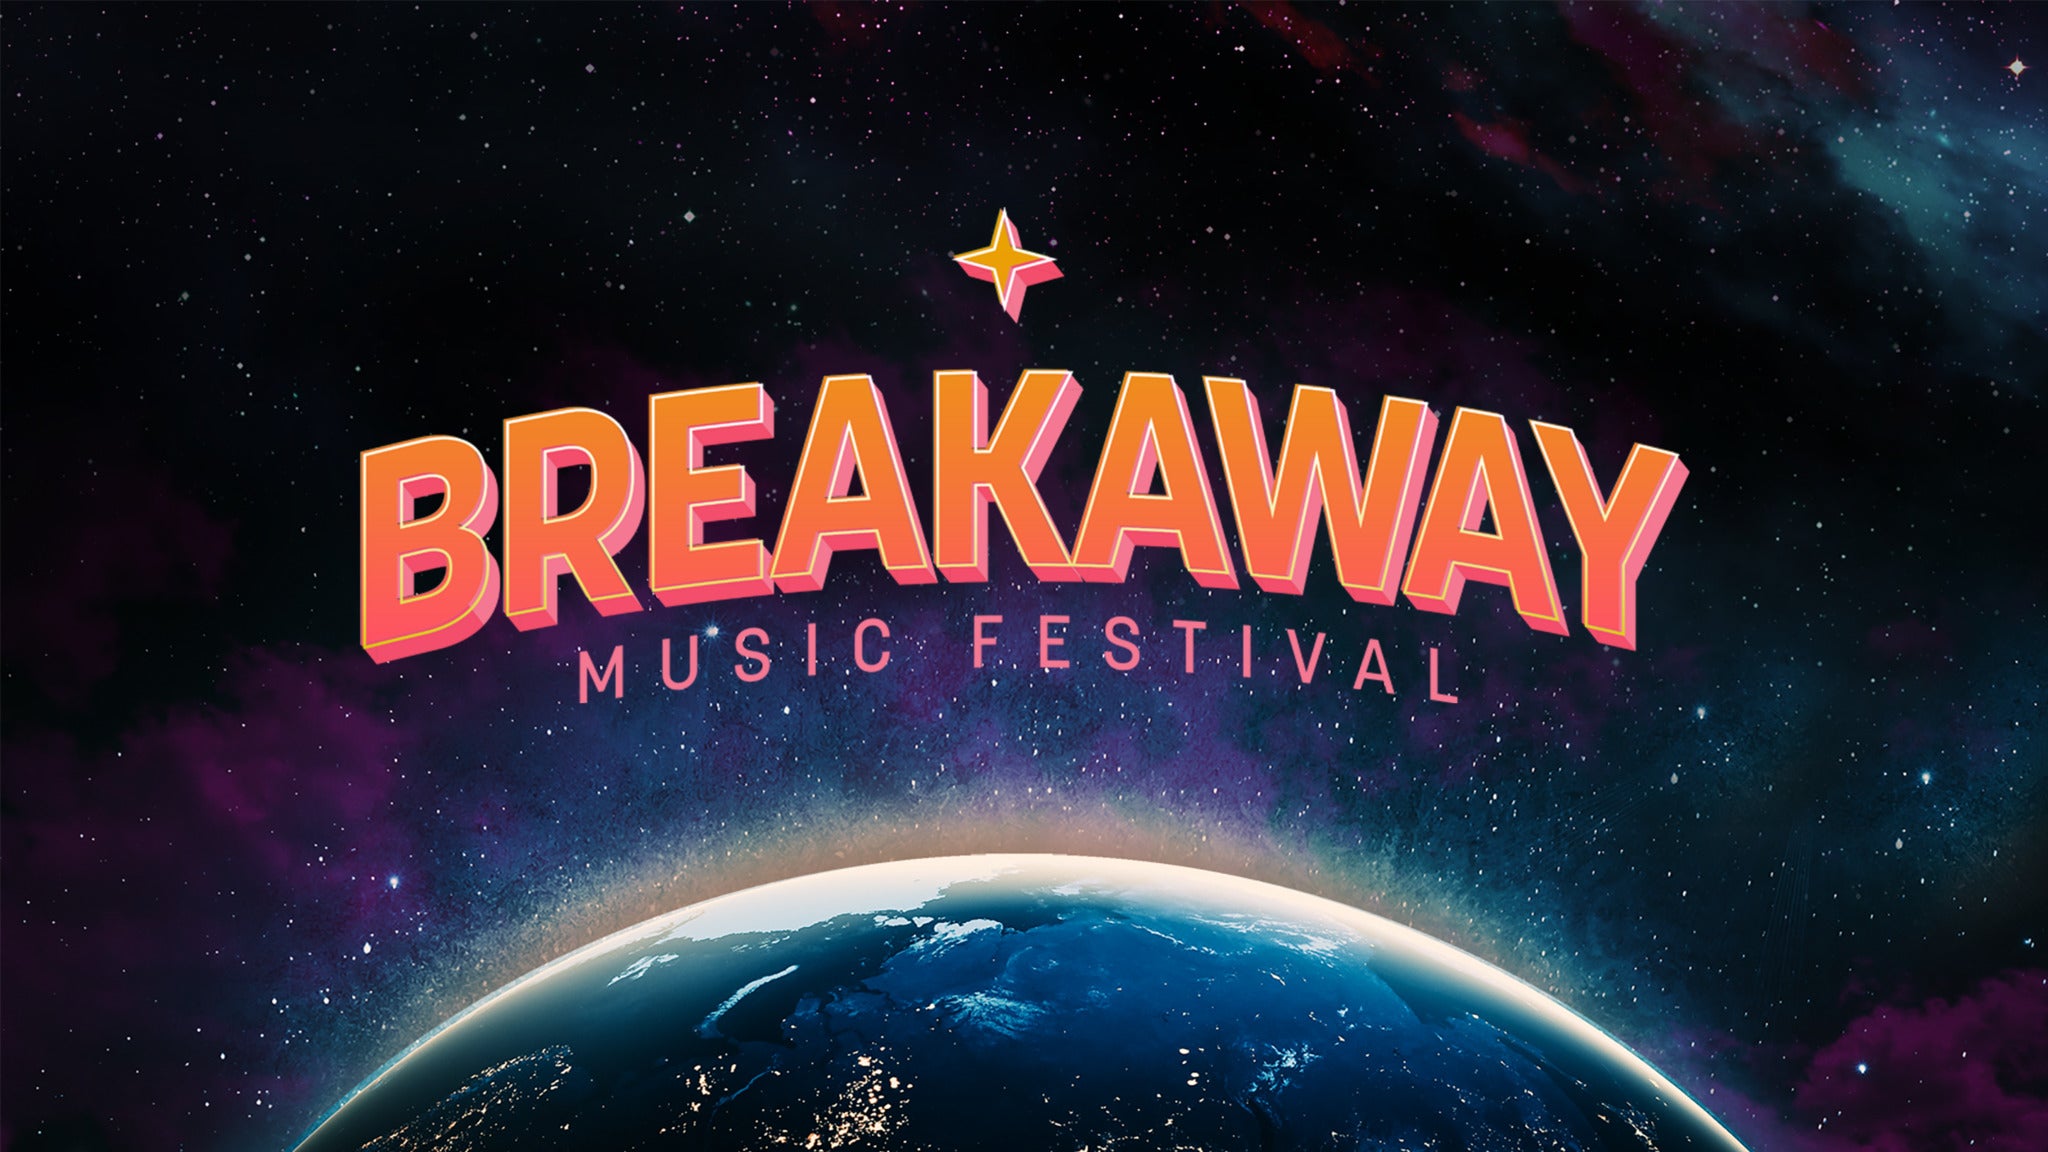 Breakaway Music Festival - Nashville Tickets, 2022 Concert Tour Dates